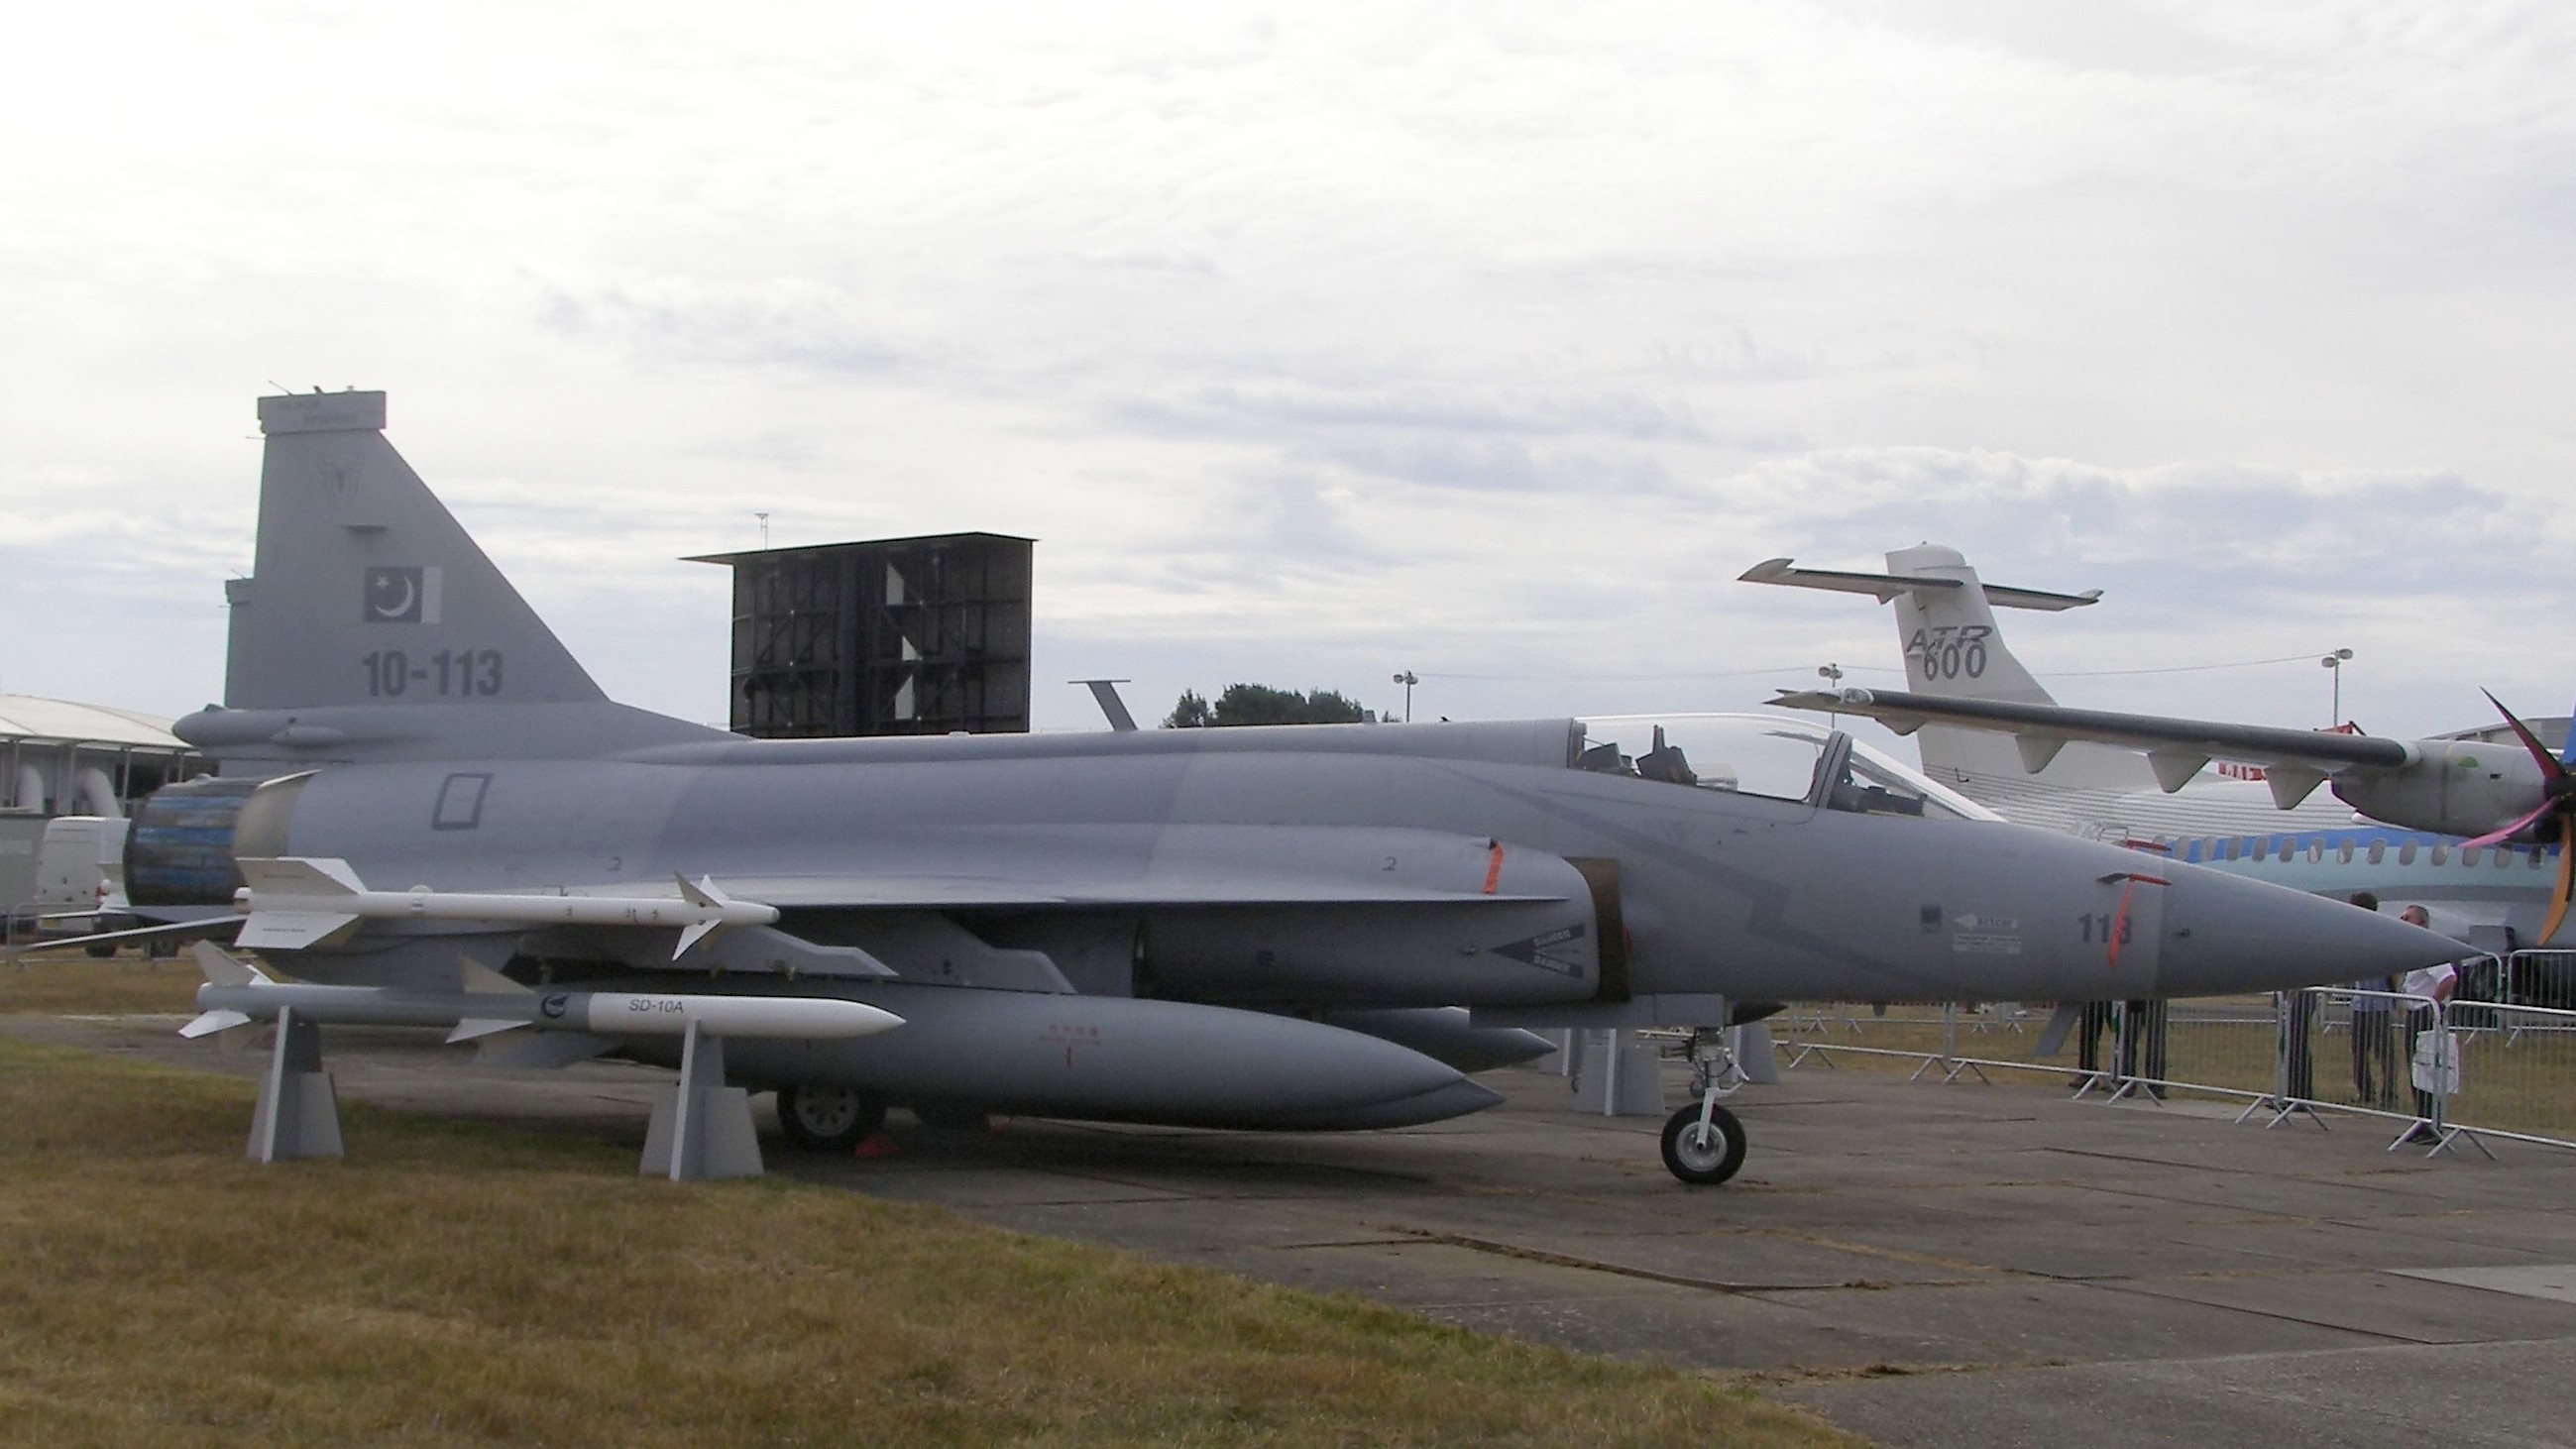 JF-17 Thunder 10-113